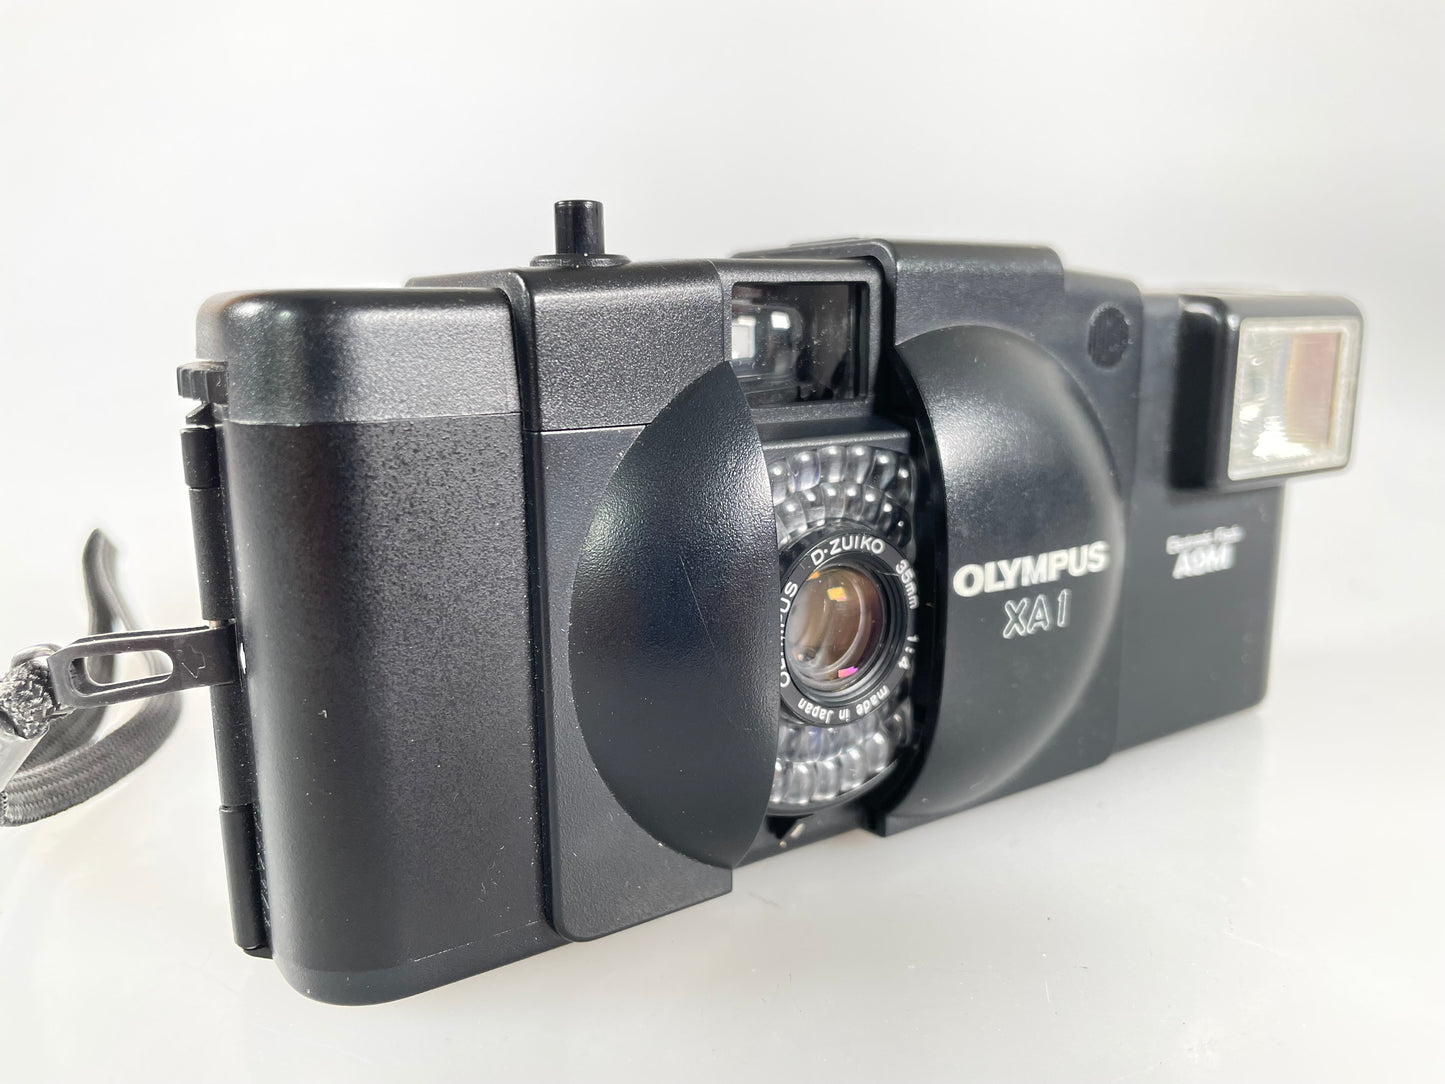 OLYMPUS XA1 35mm point & shoot Film Camera with A9M flash